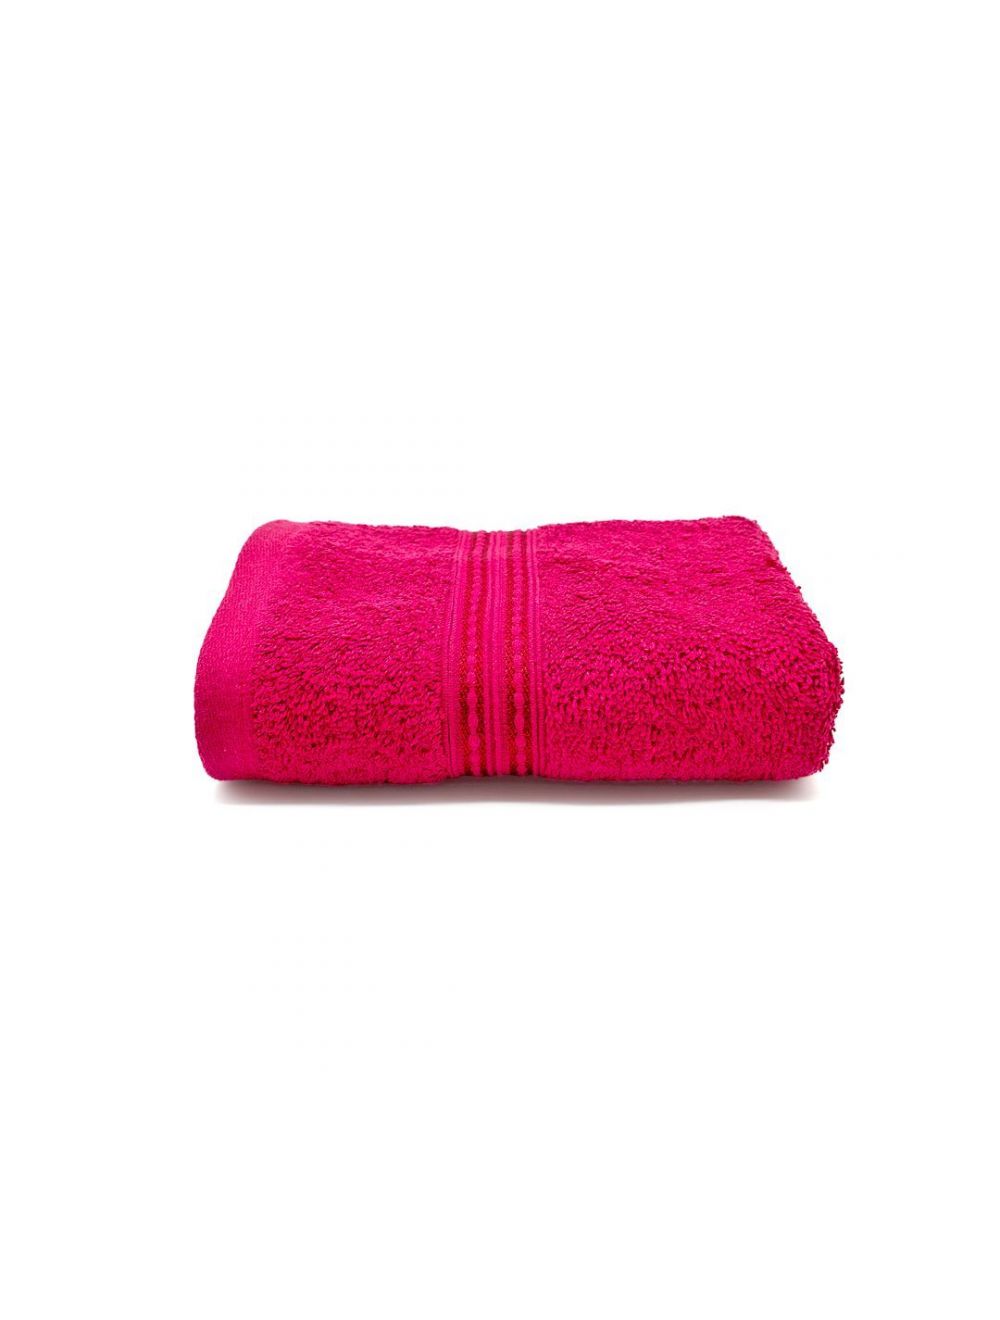 Rahalife 100% Cotton Hand Towel, Classic Collection, Maroon   -14RLHT015